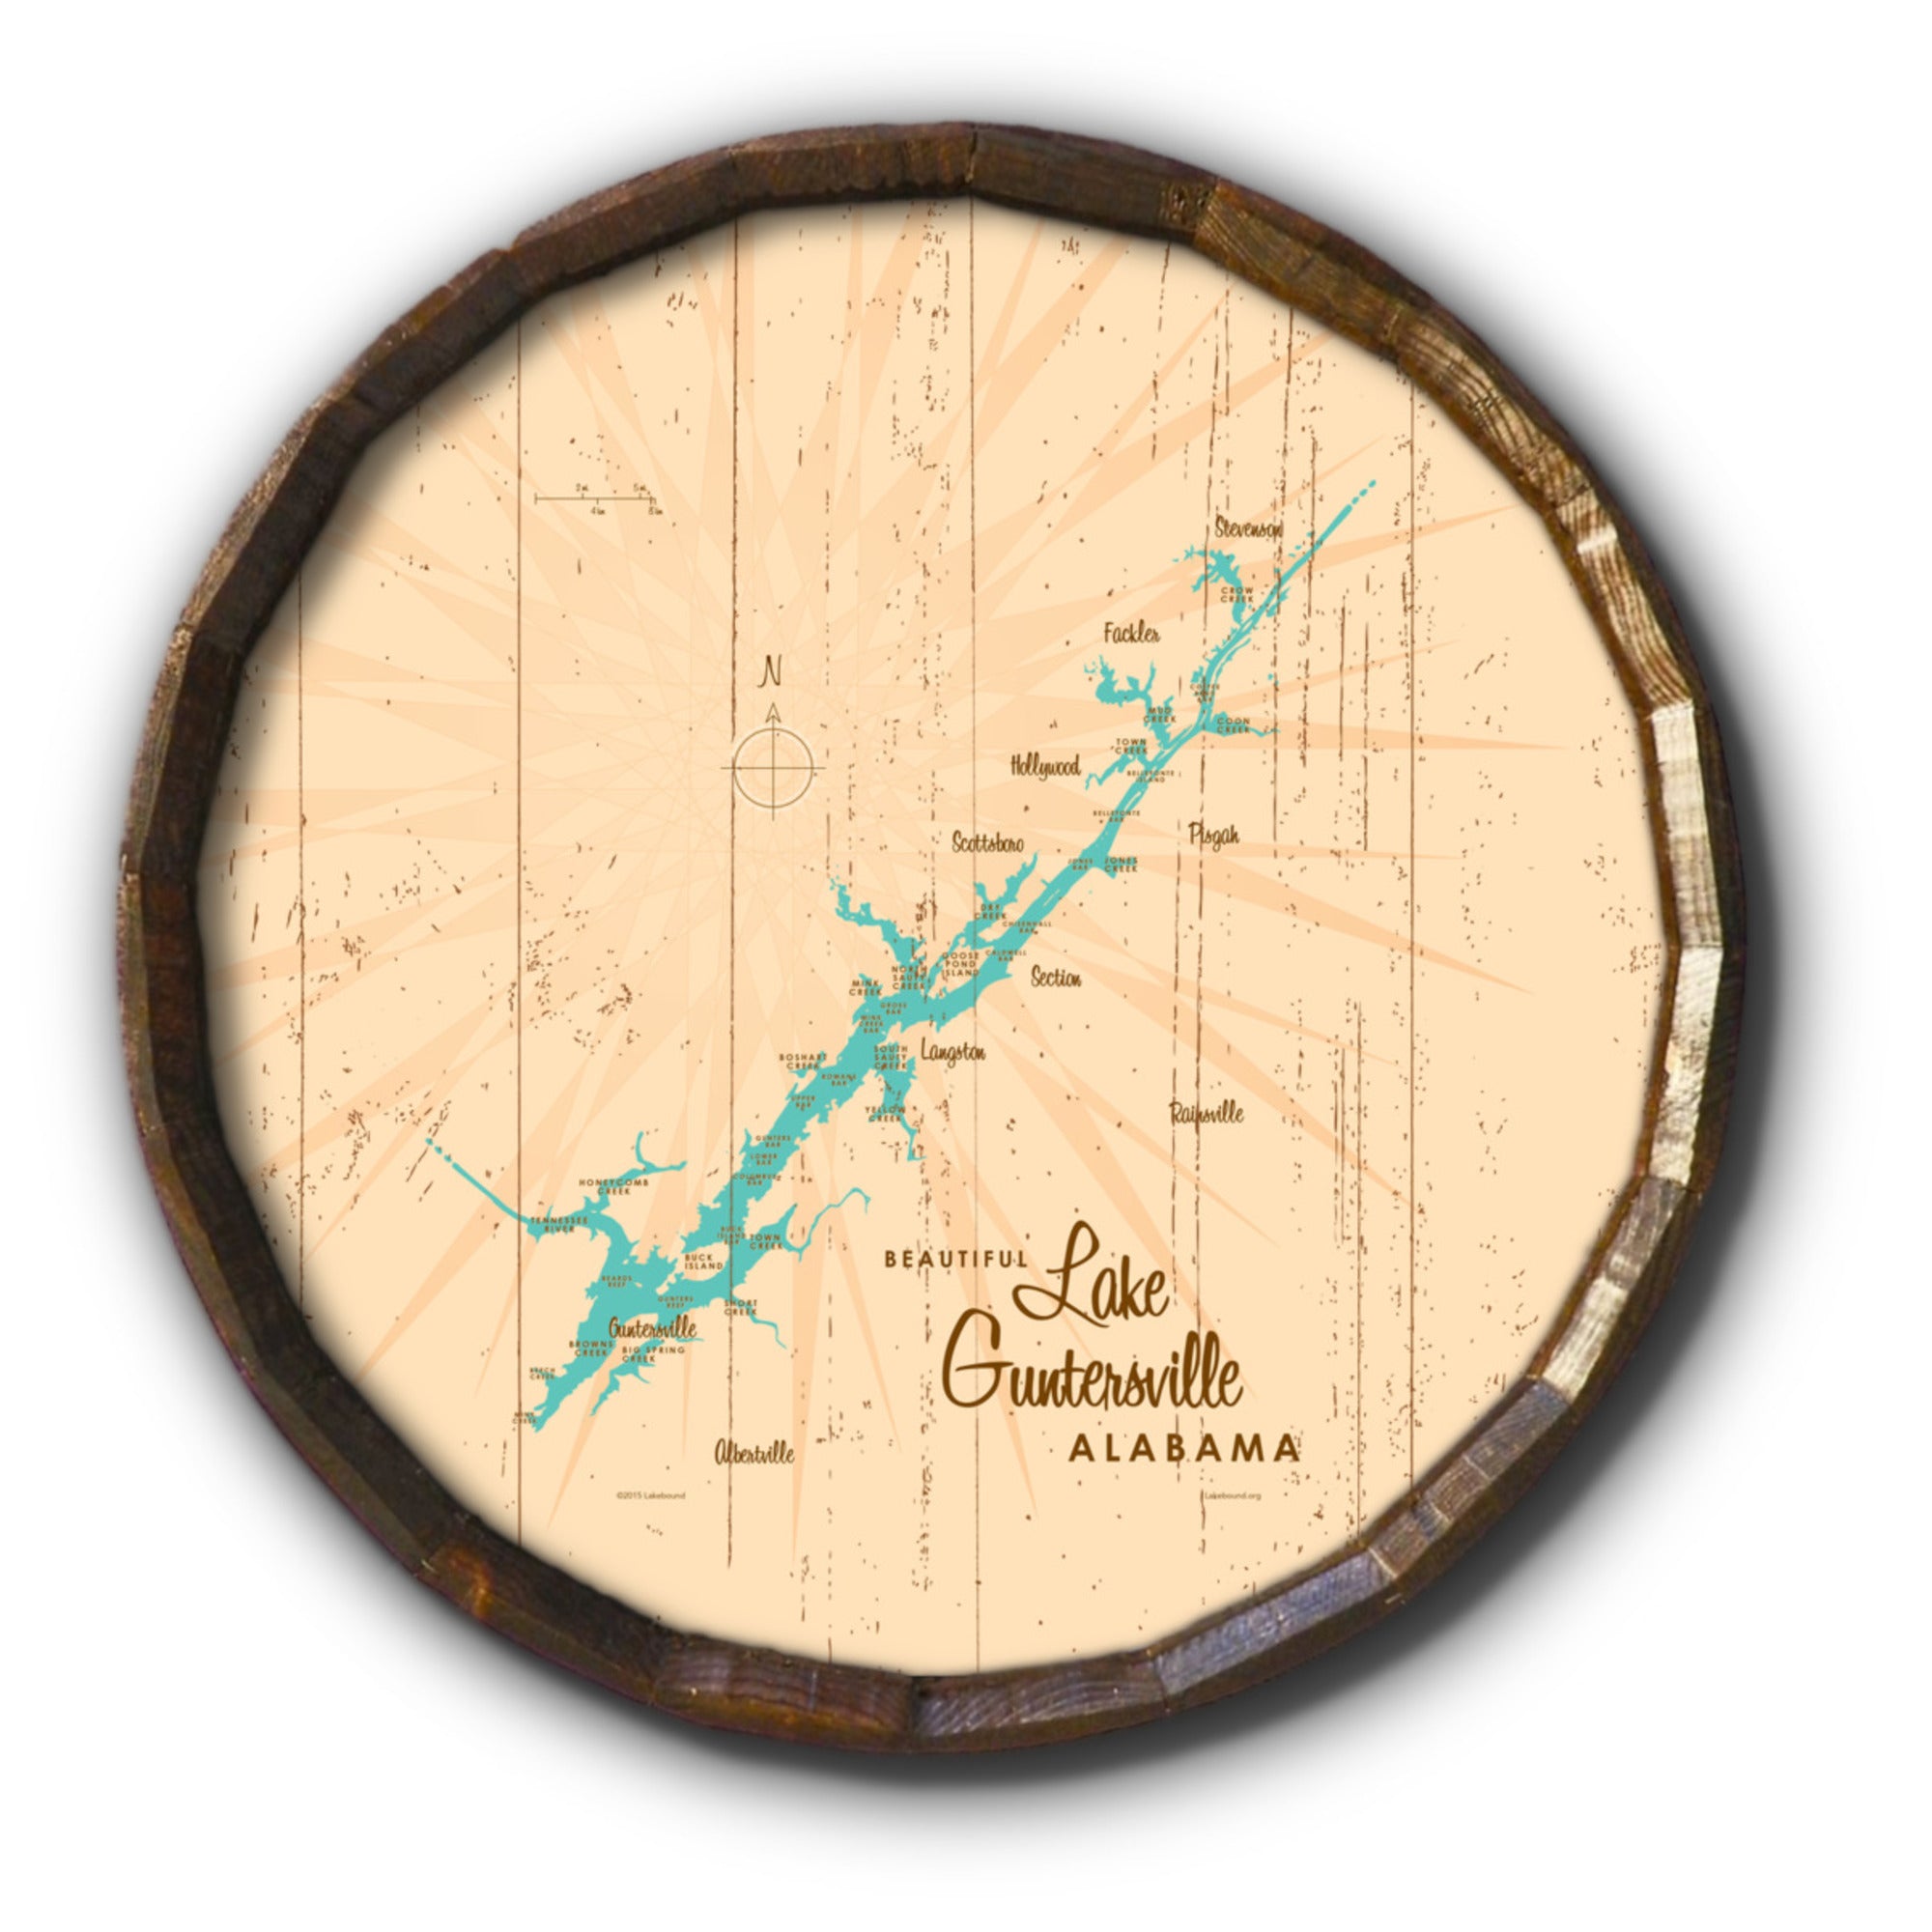 Lake Guntersville Alabama, Rustic Barrel End Map Art